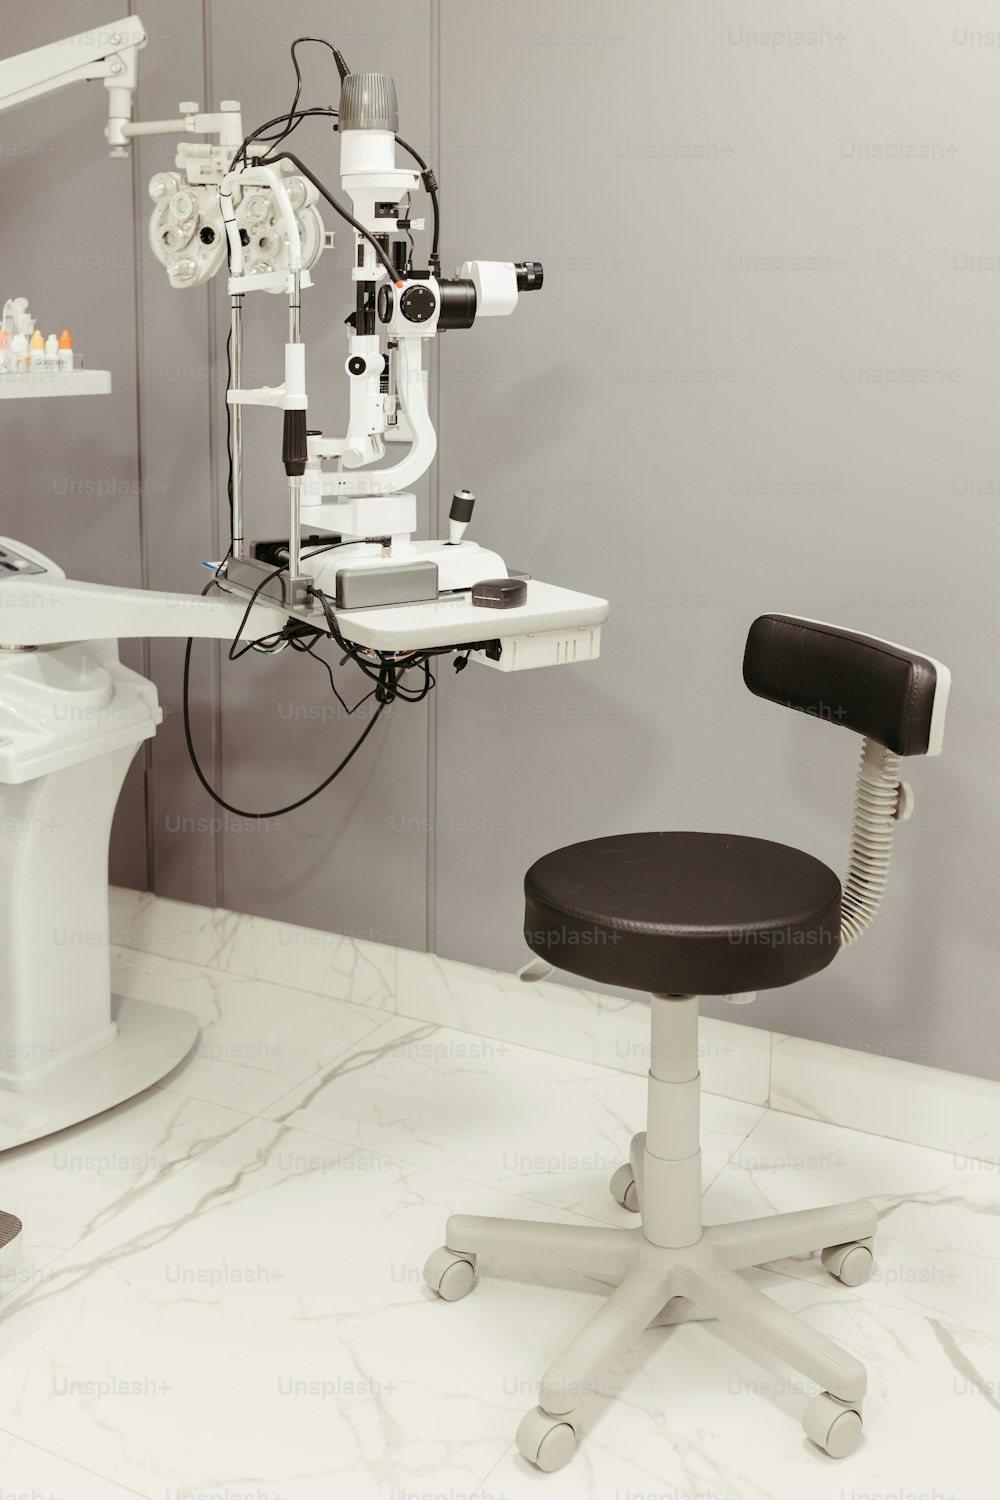 un fauteuil de dentiste avec un microscope dessus;